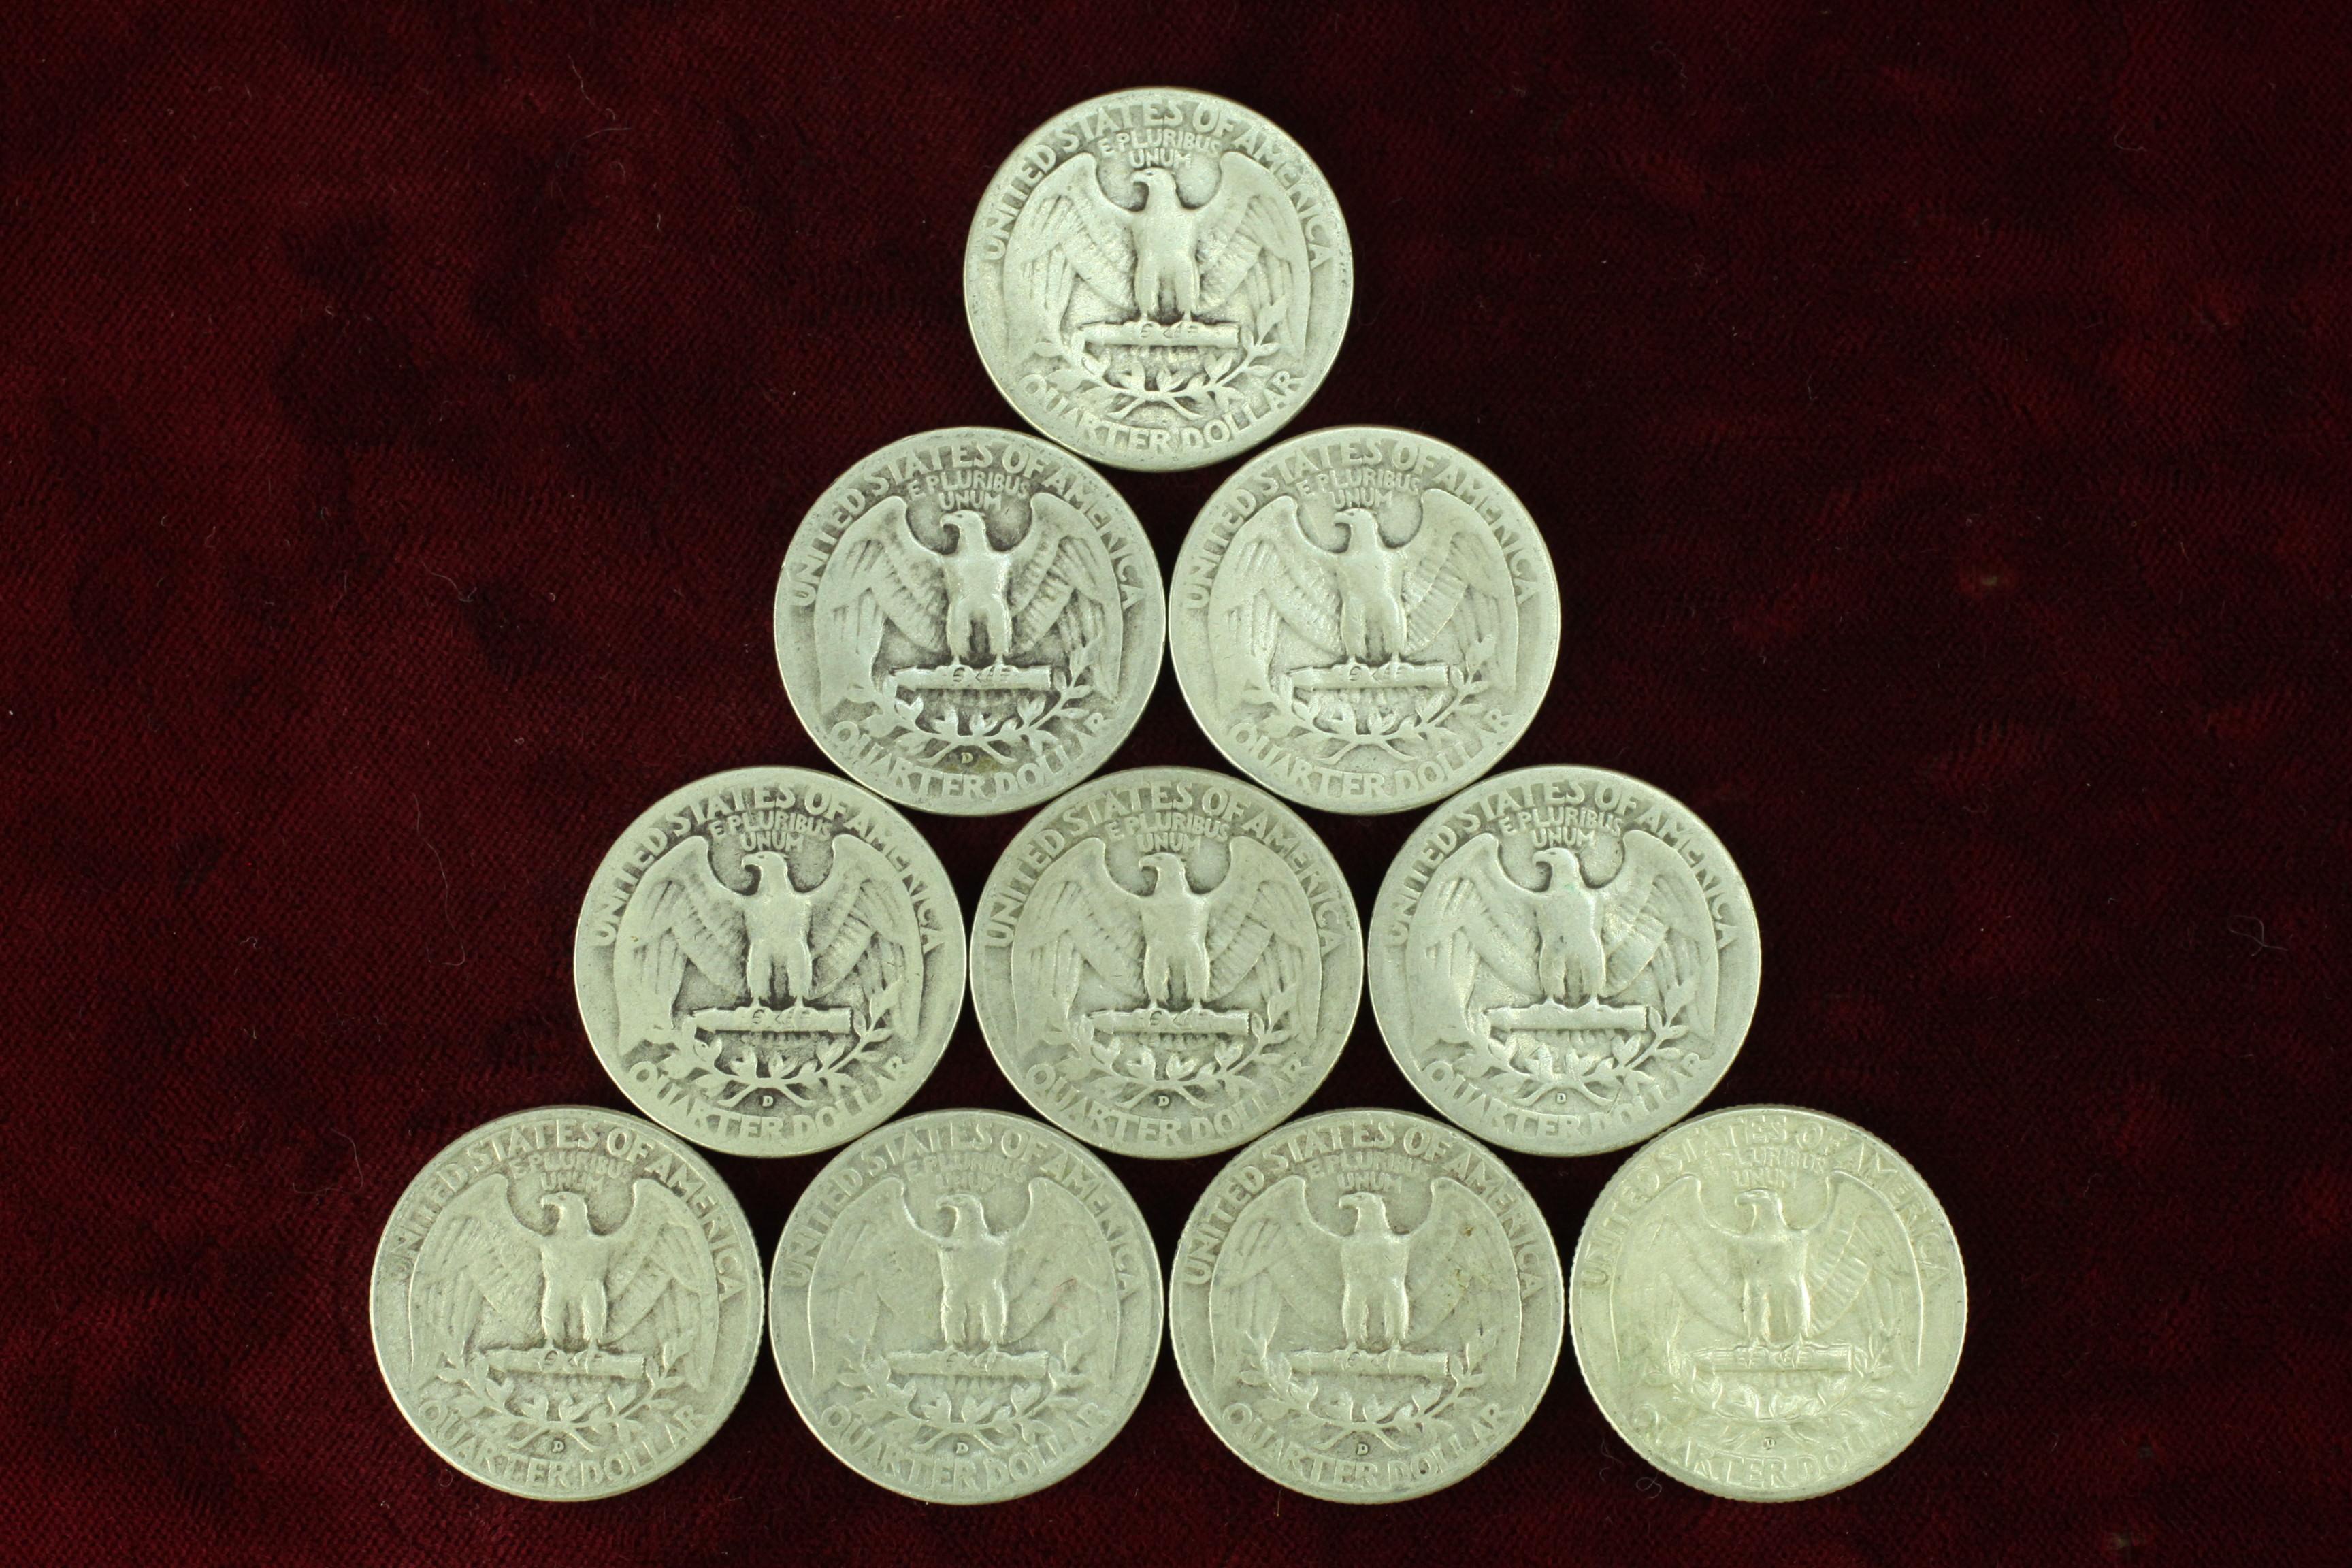 10 Washington Silver Quarters